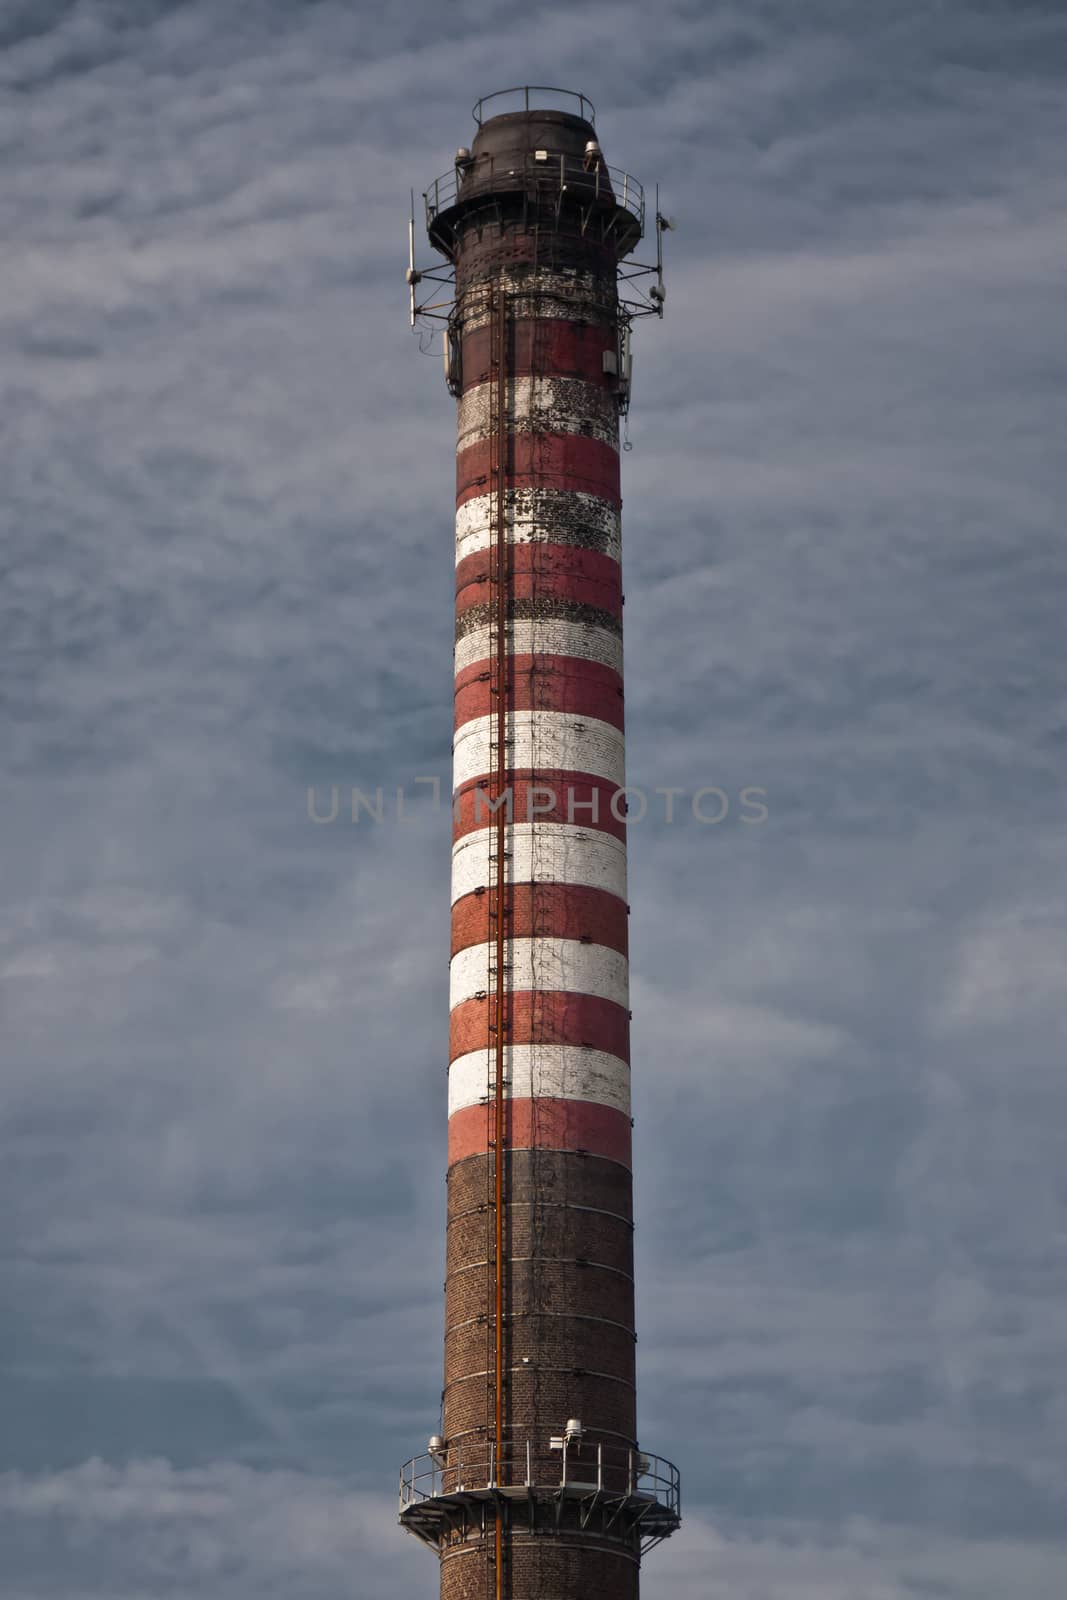 Industrial chimney